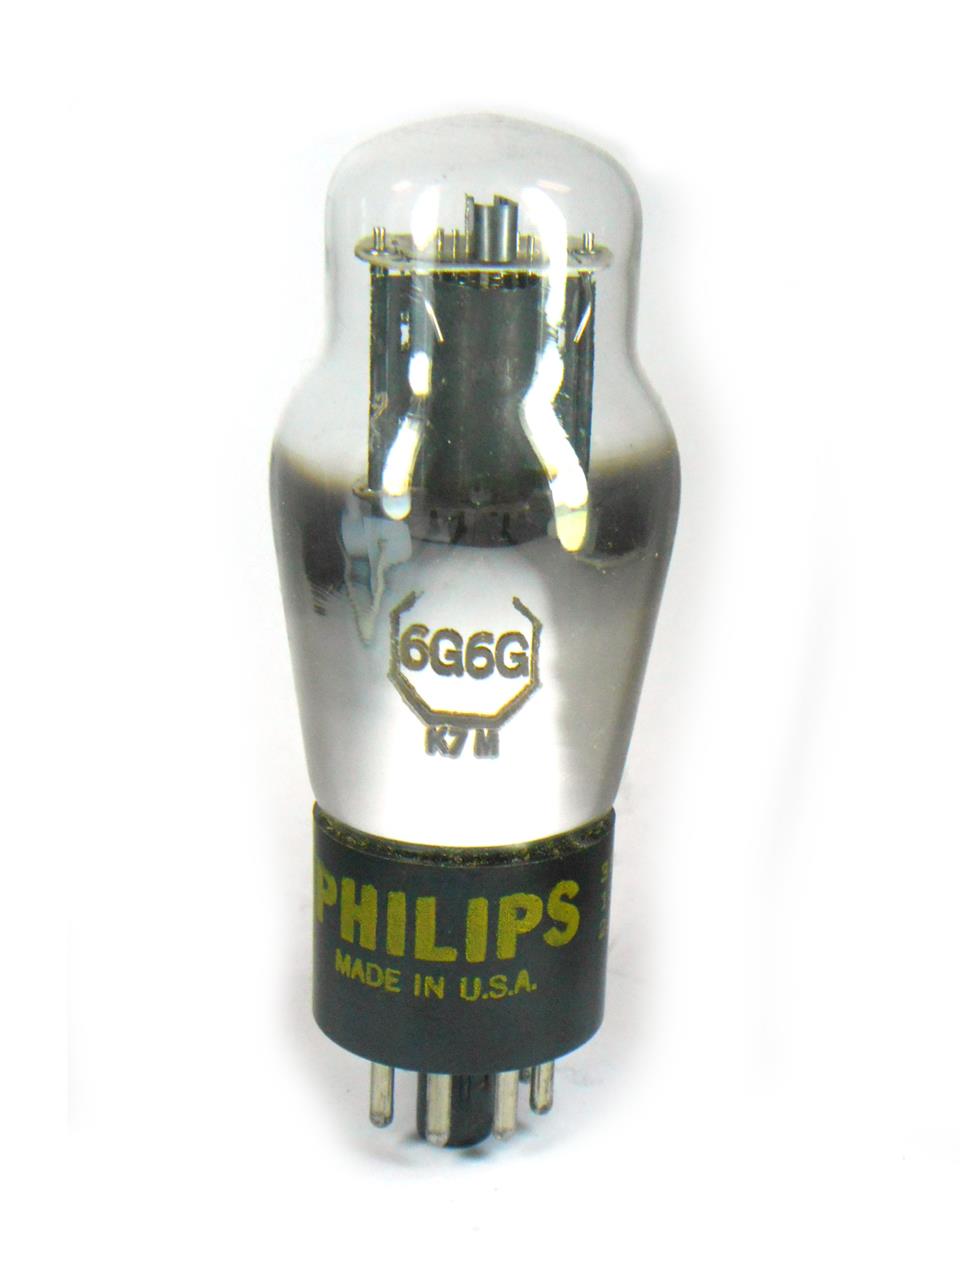 Válvulas pentodo de potência para áudio com base octal - Válvula 6G6G Philips